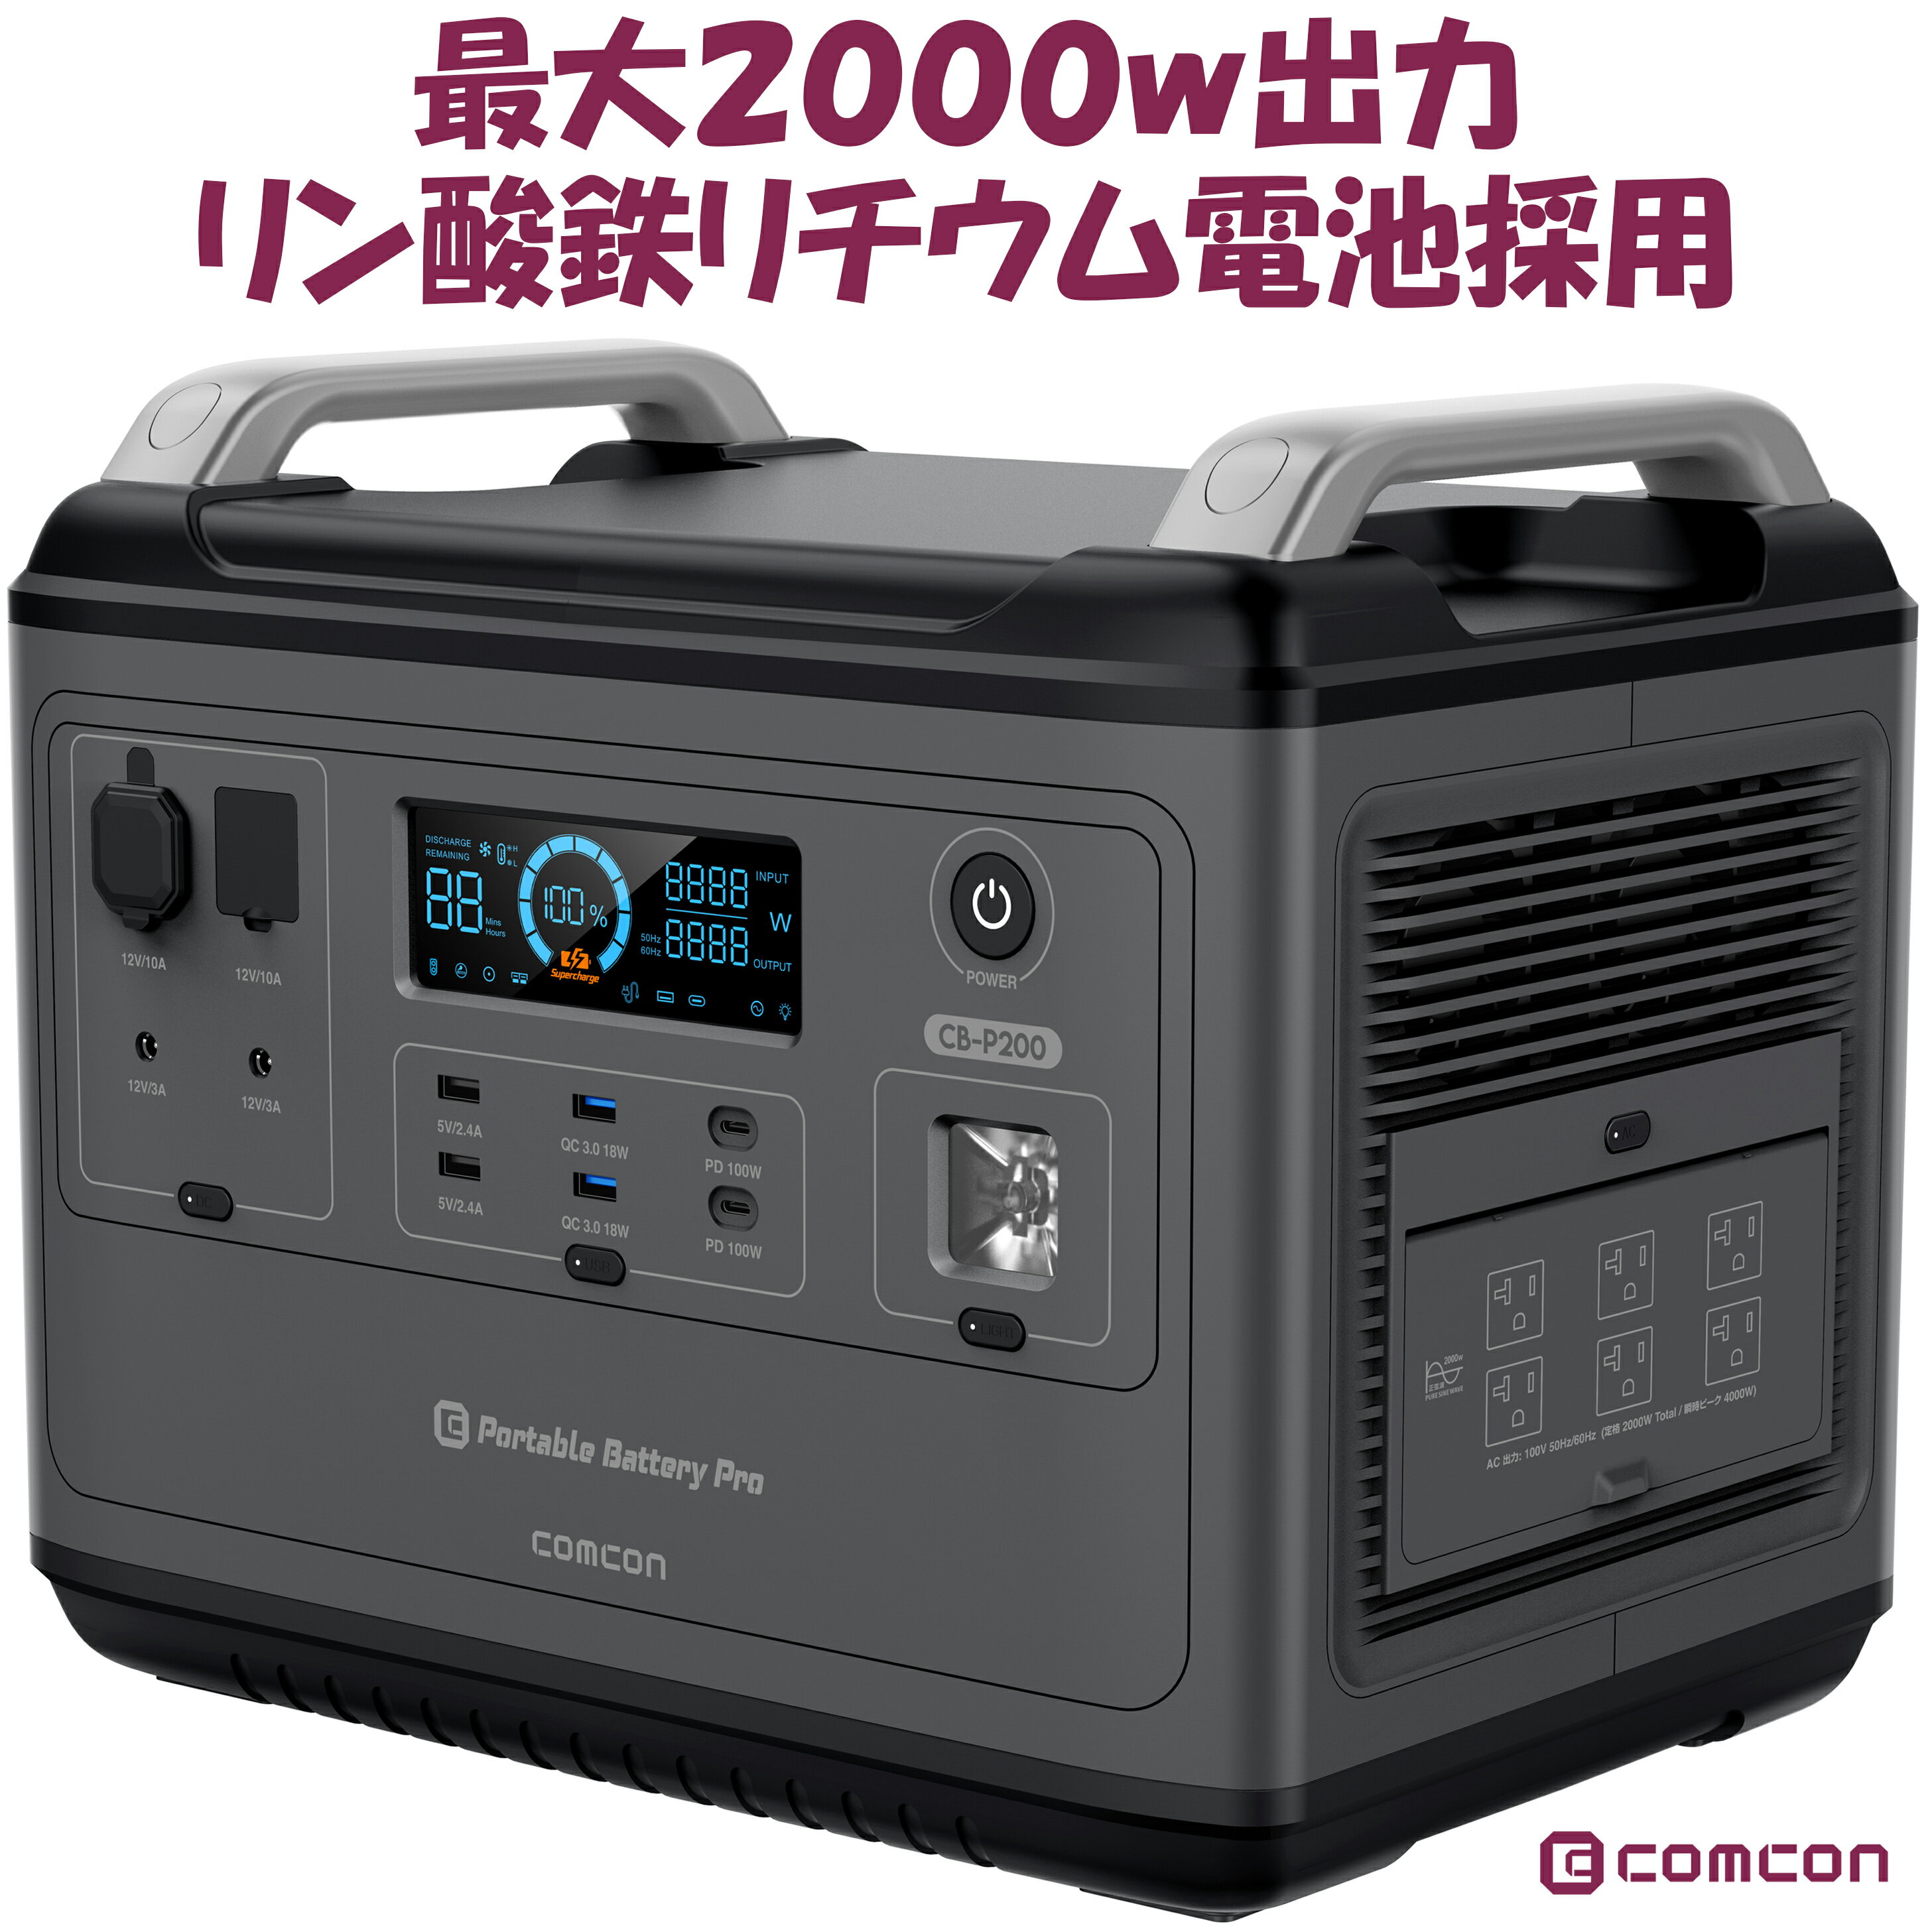 2000W の 高出力 リン酸鉄 comcon ポータブル電